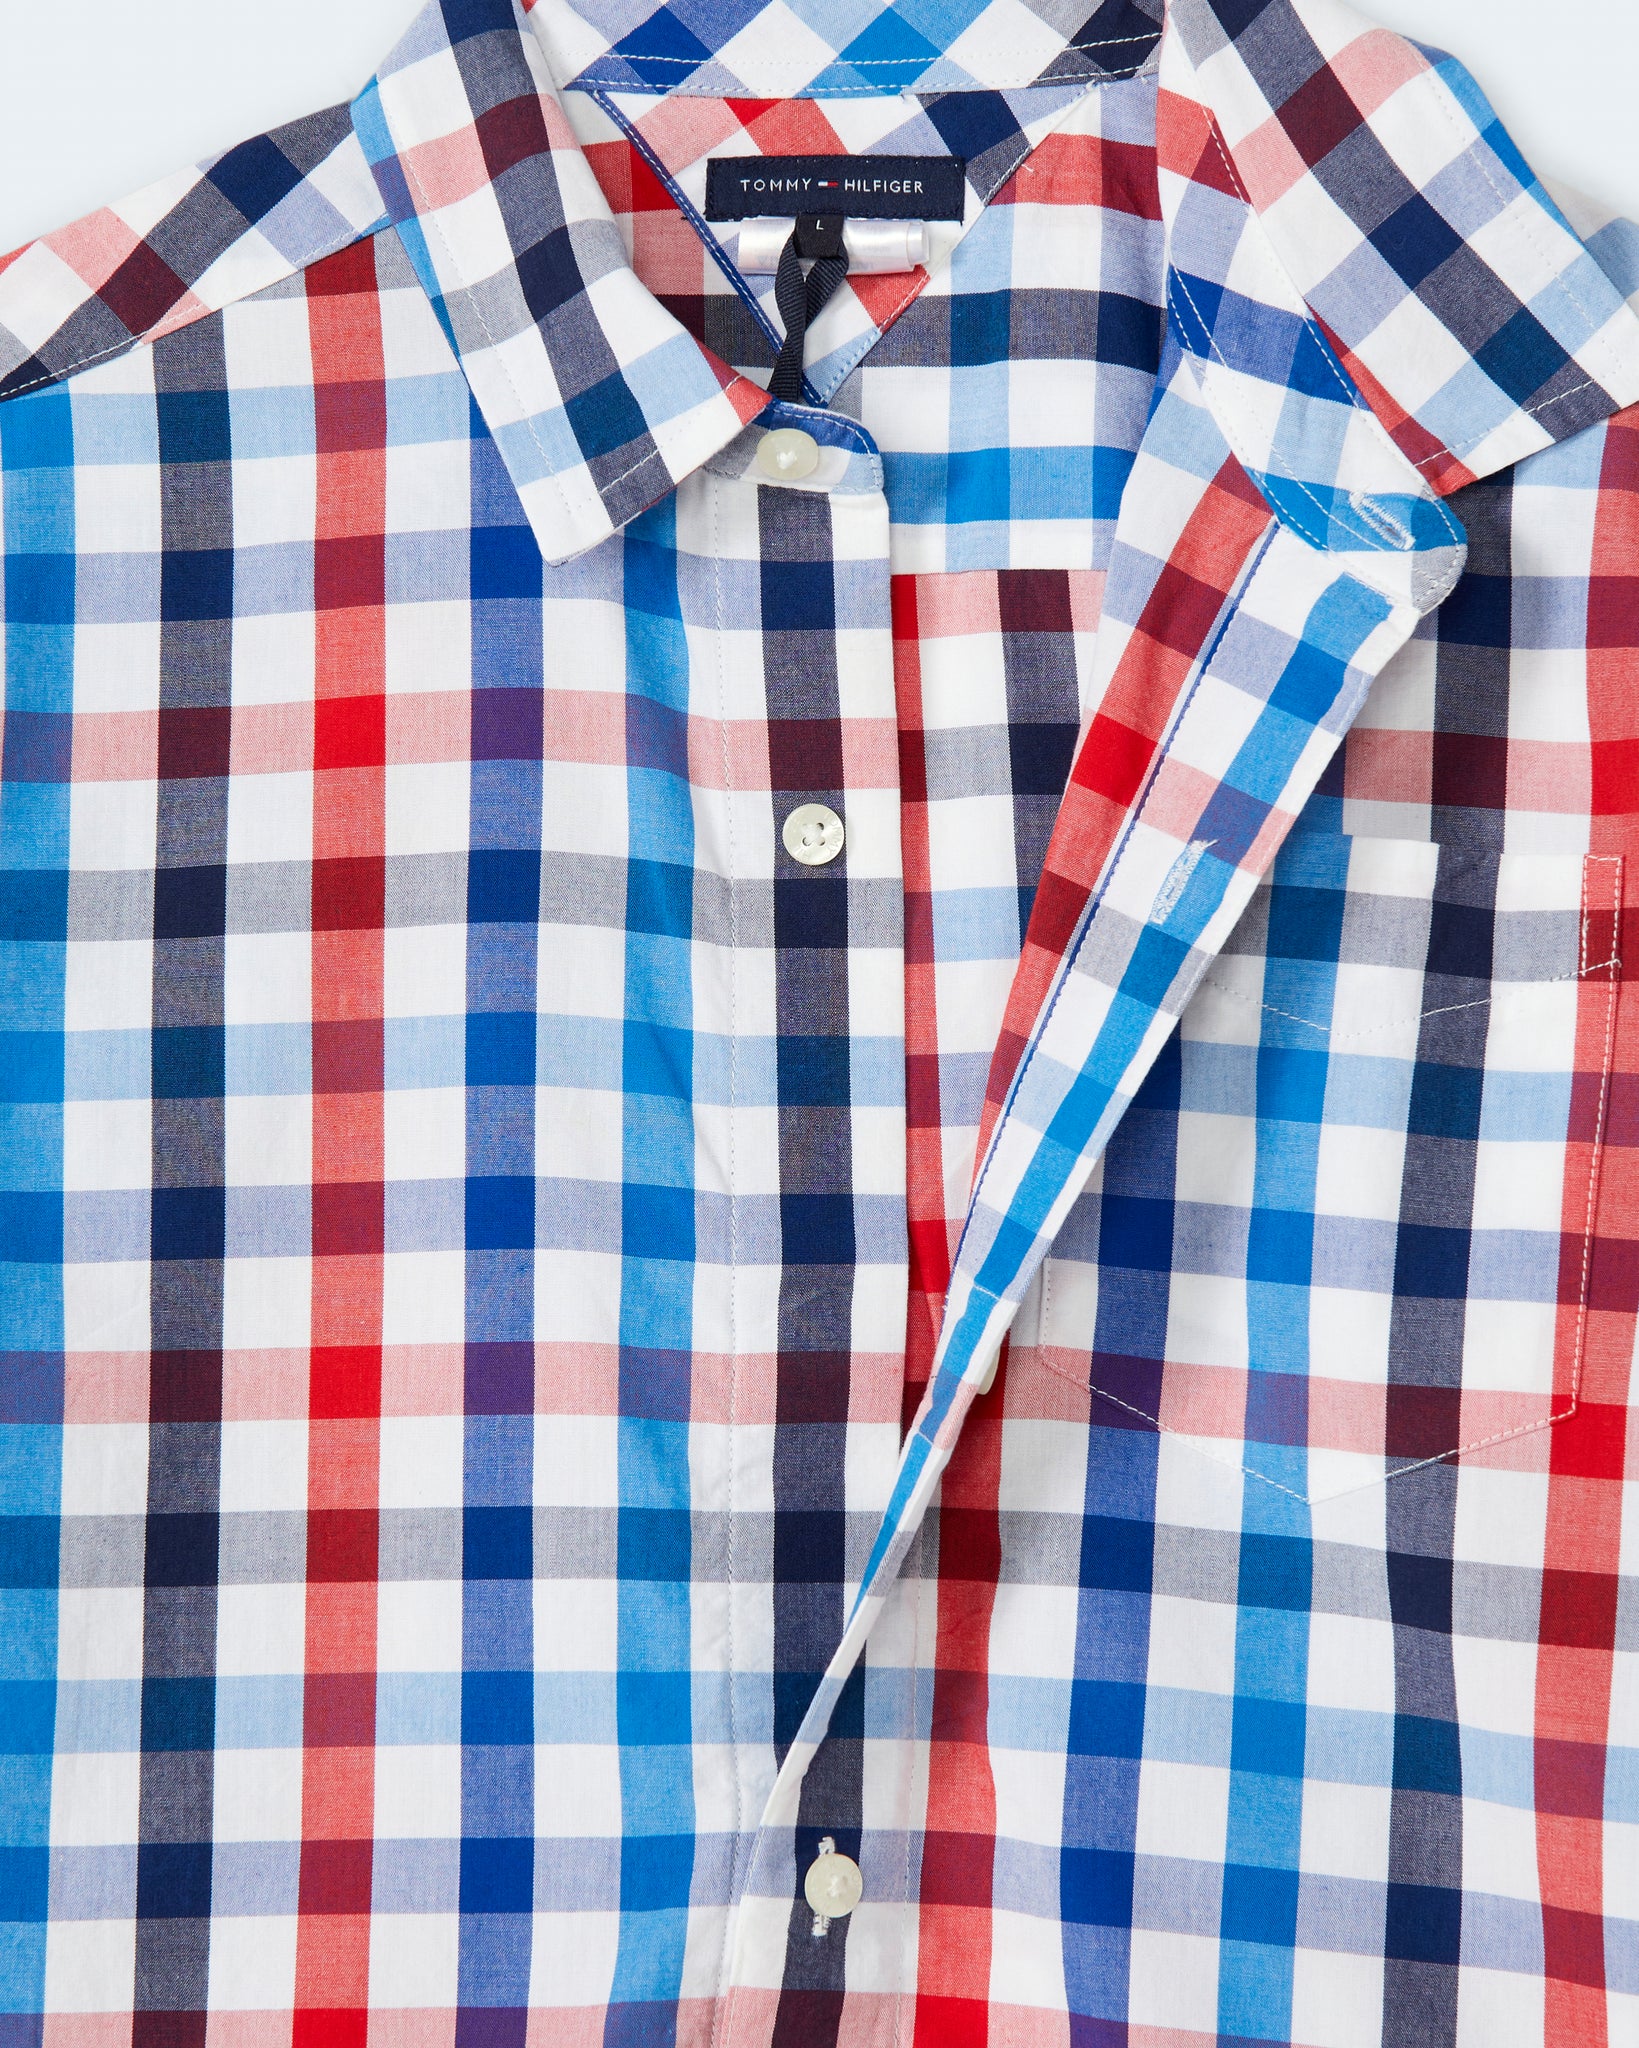 Rockford Shirt (Boys) - White/Red/Blue